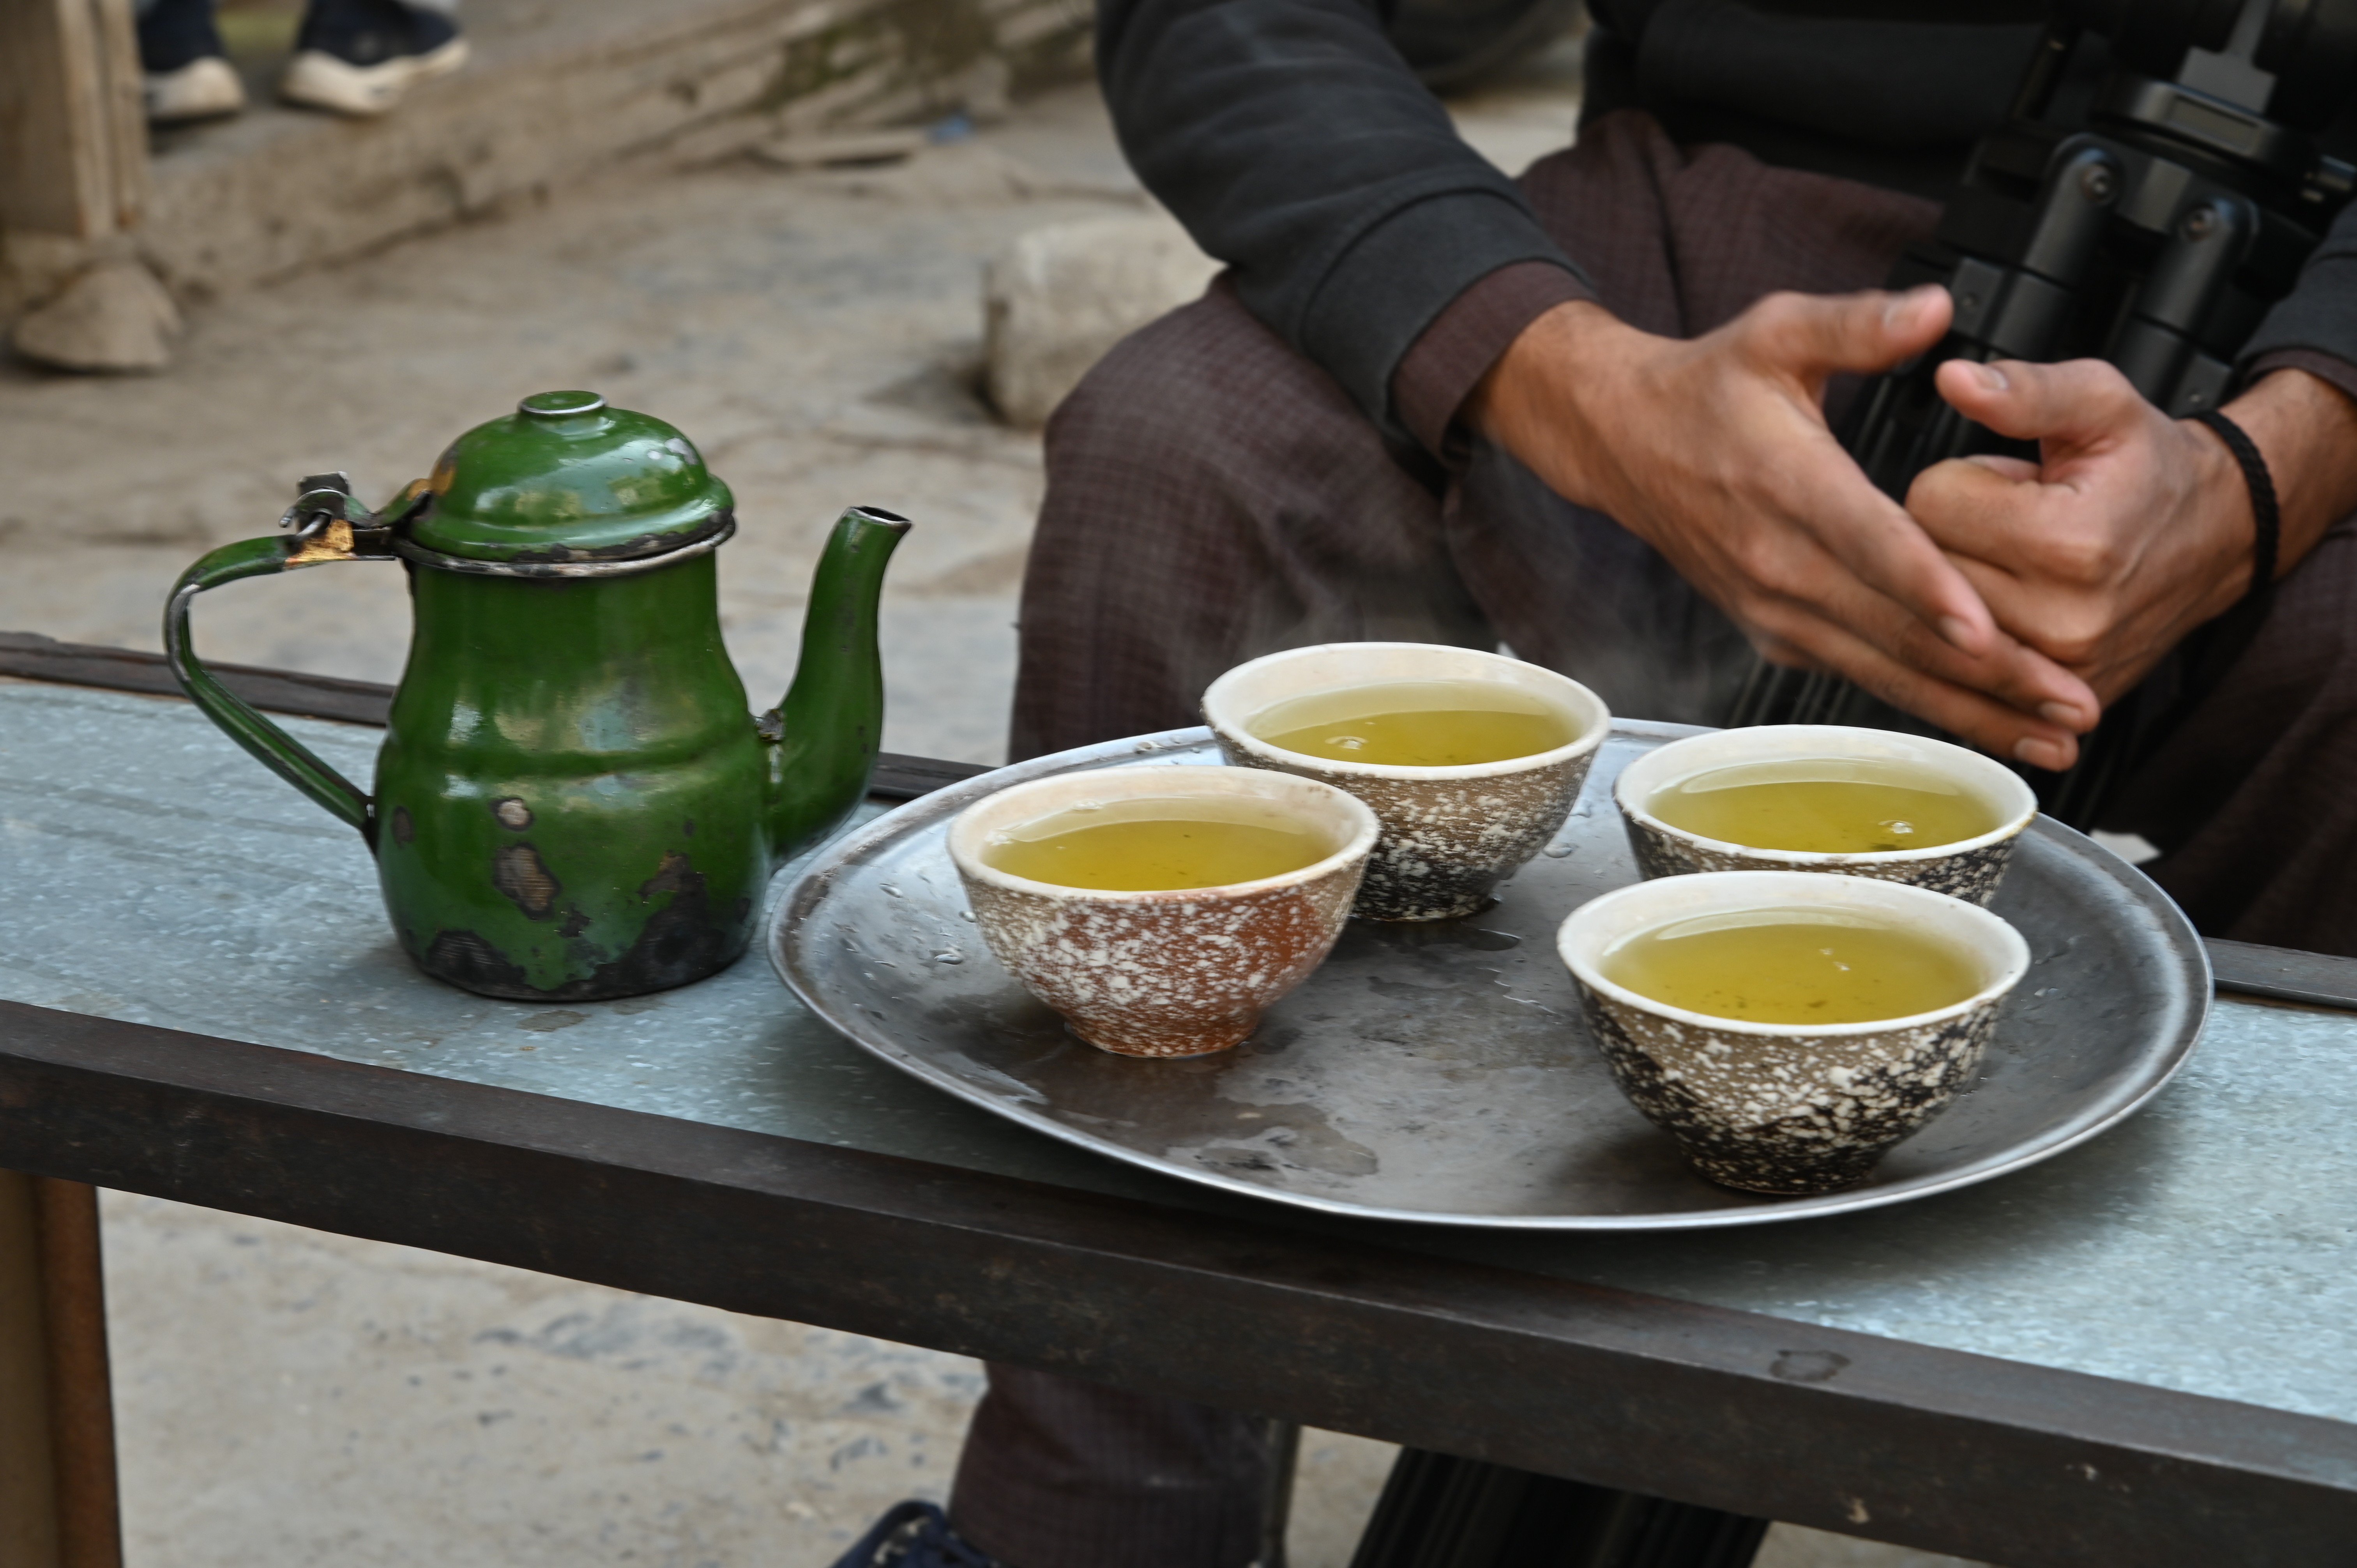 A man selling green tea